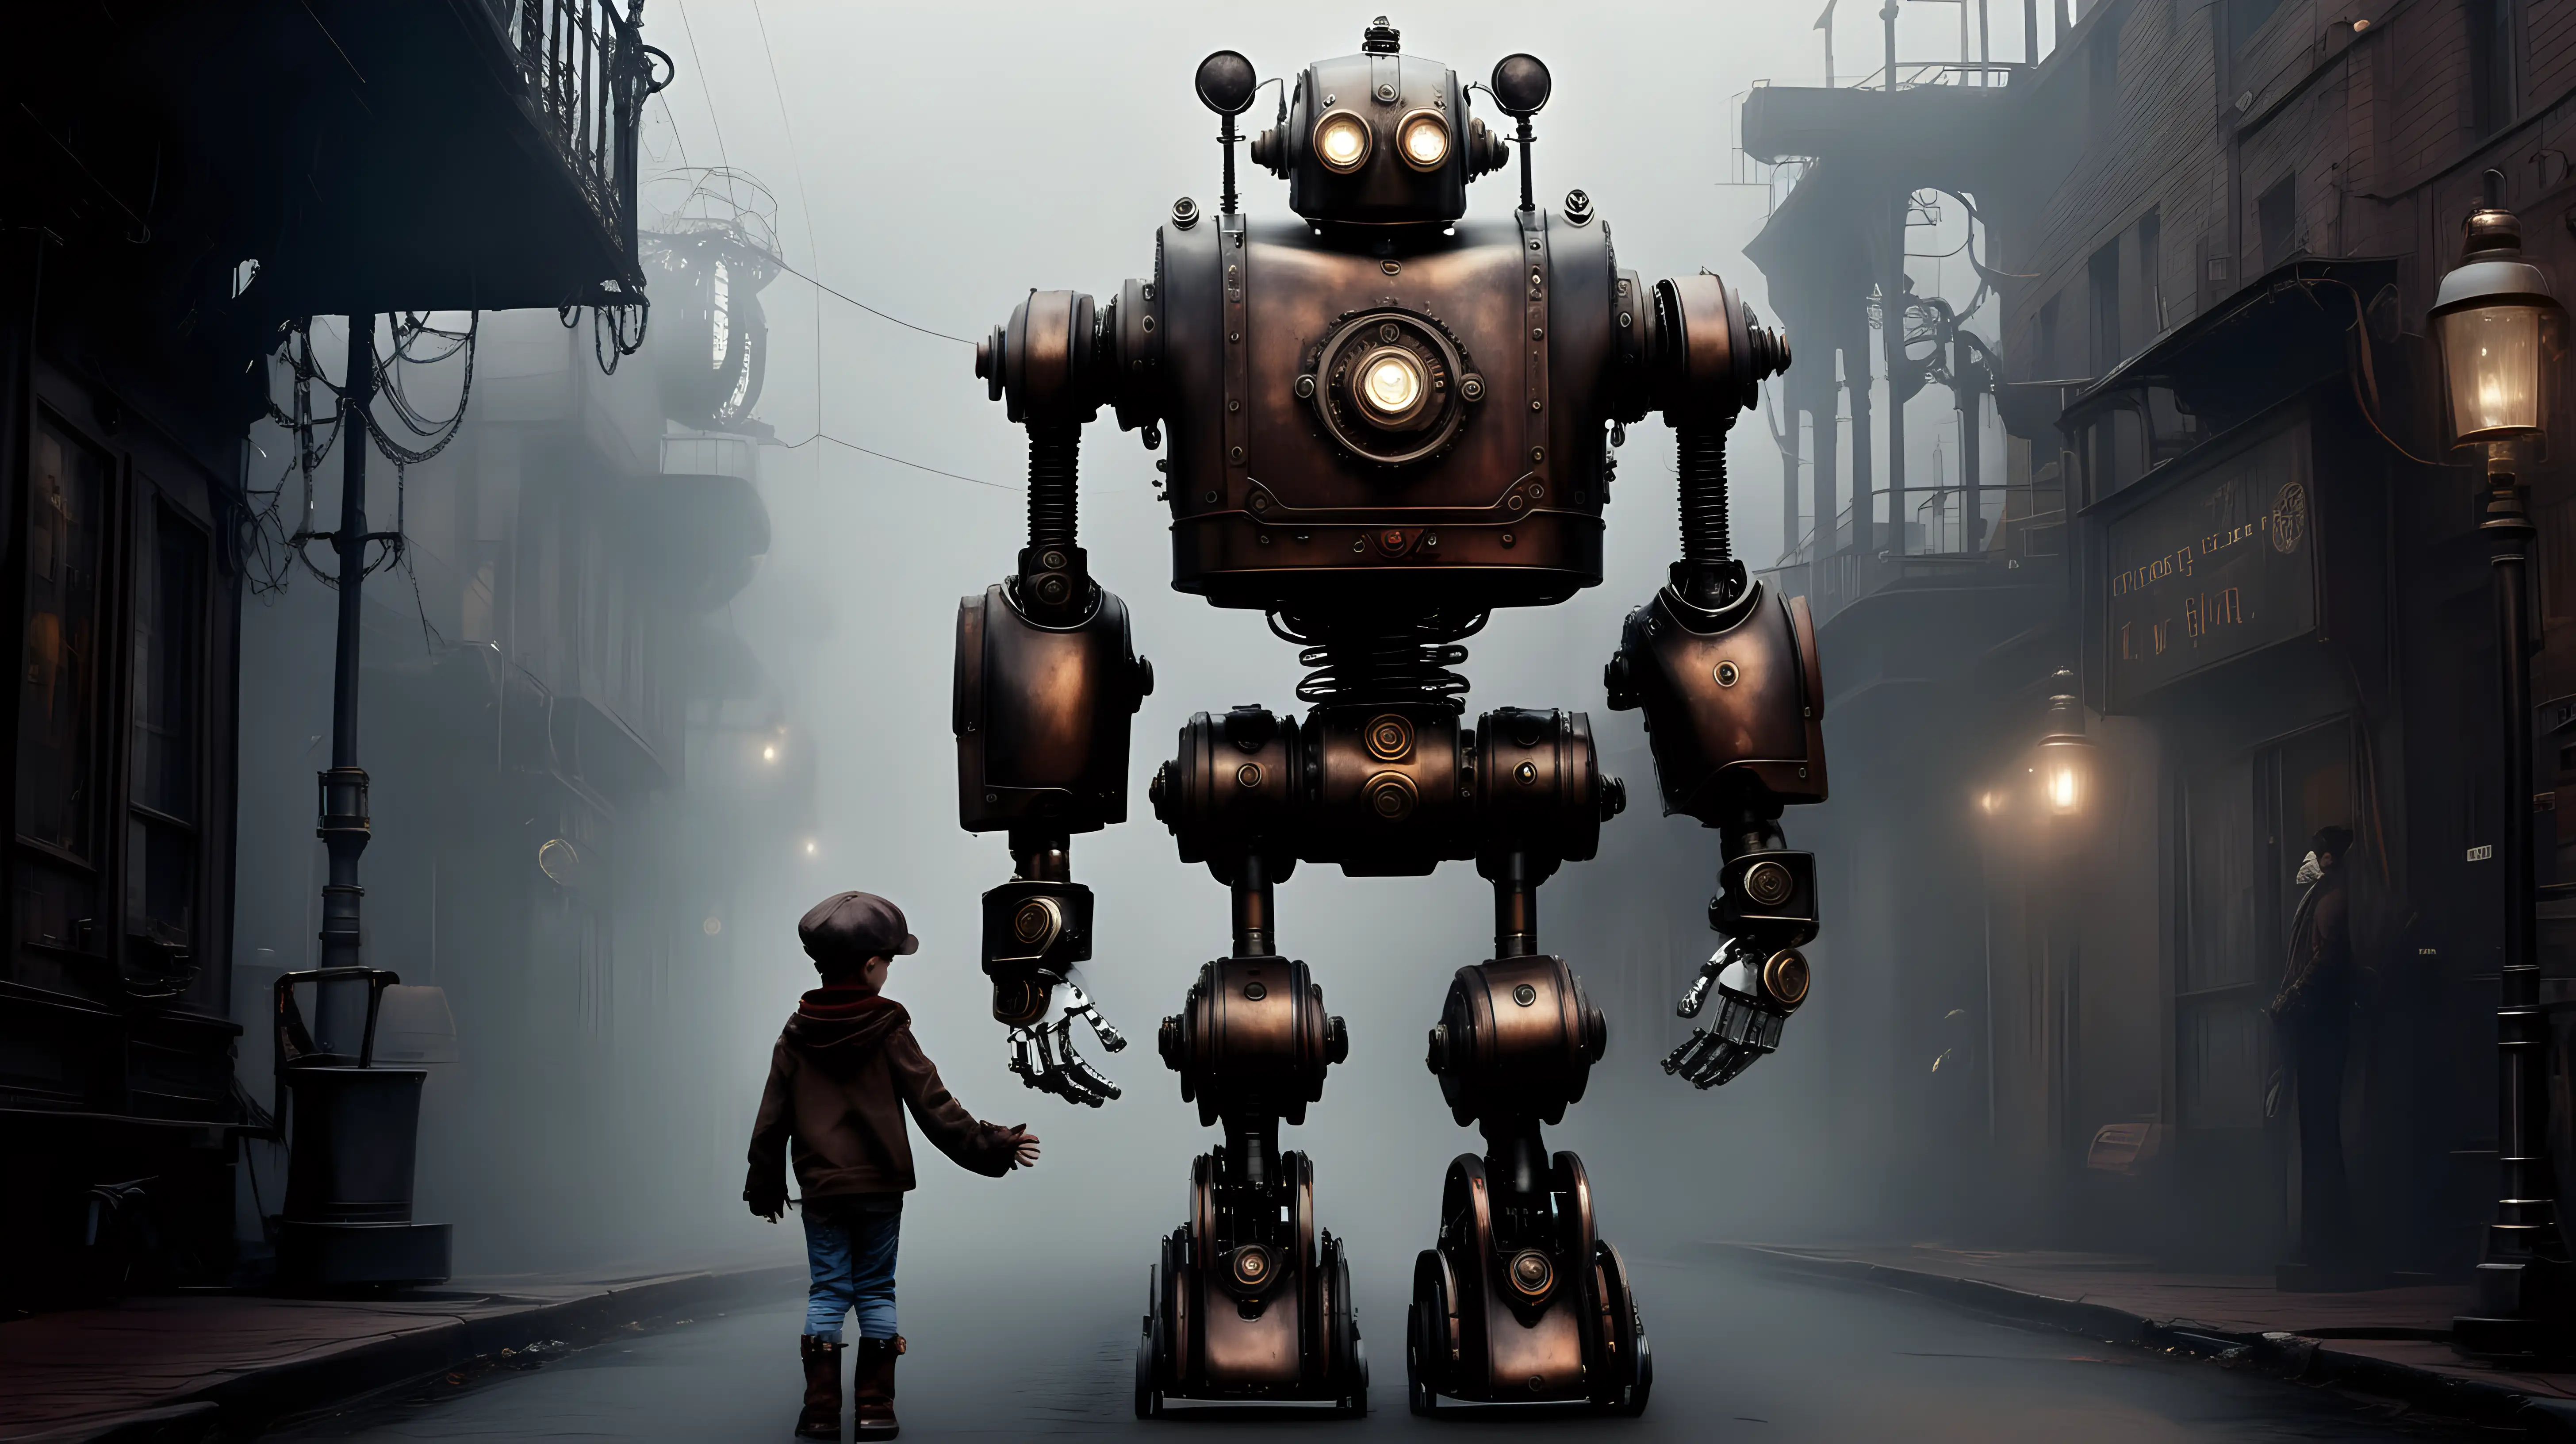 Steampunk Robot Escort Through Foggy Streets